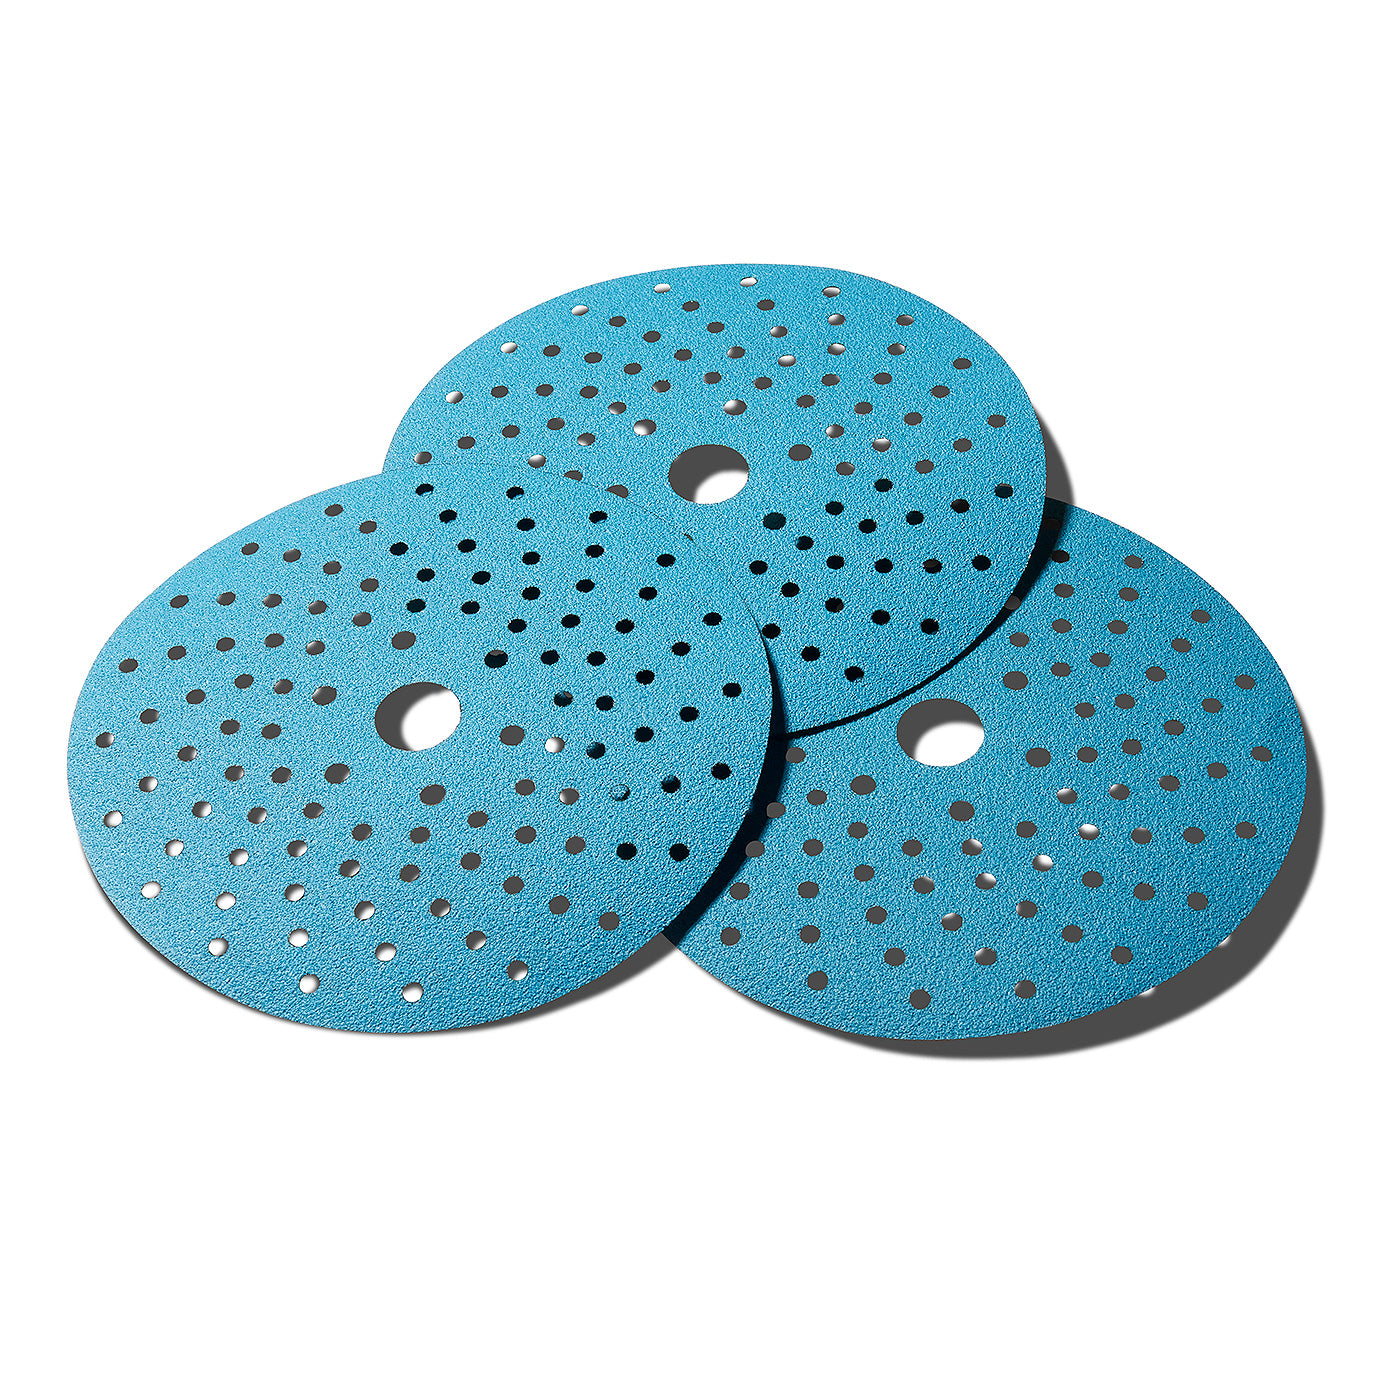 125mm Ceramic Abrasive Discs - Rutlands Limited